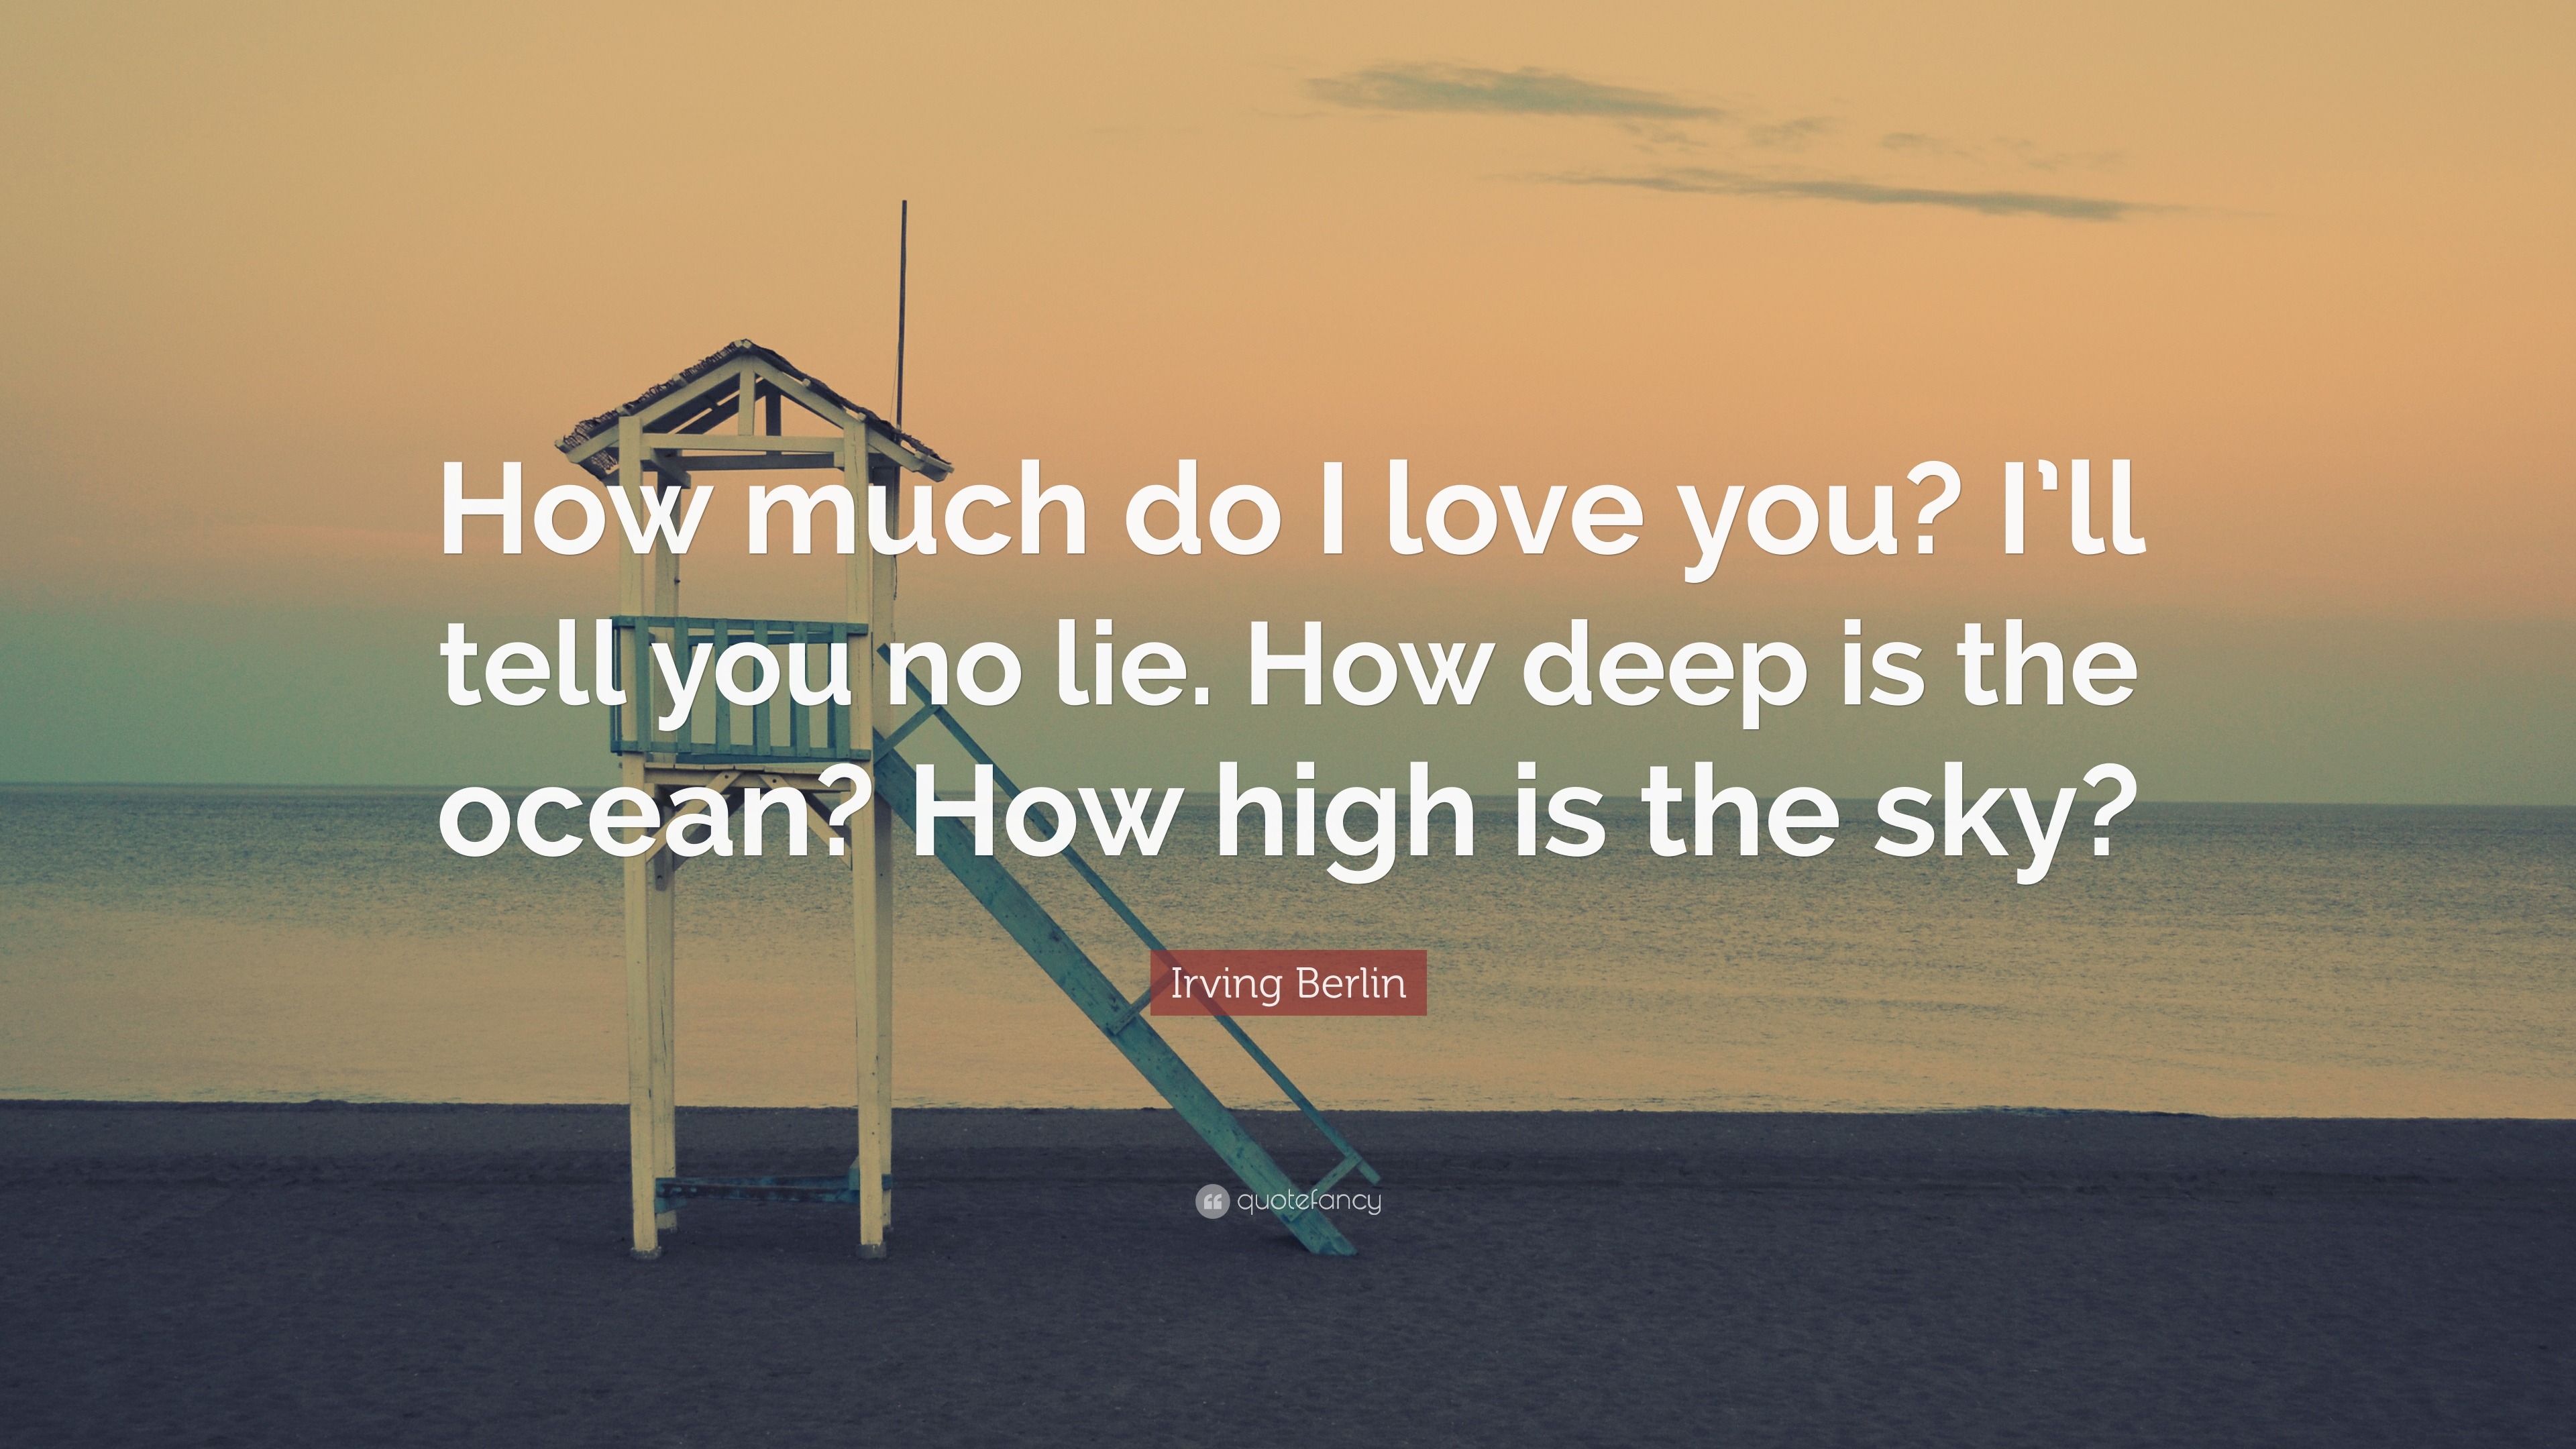 Is love a lie? - Quora